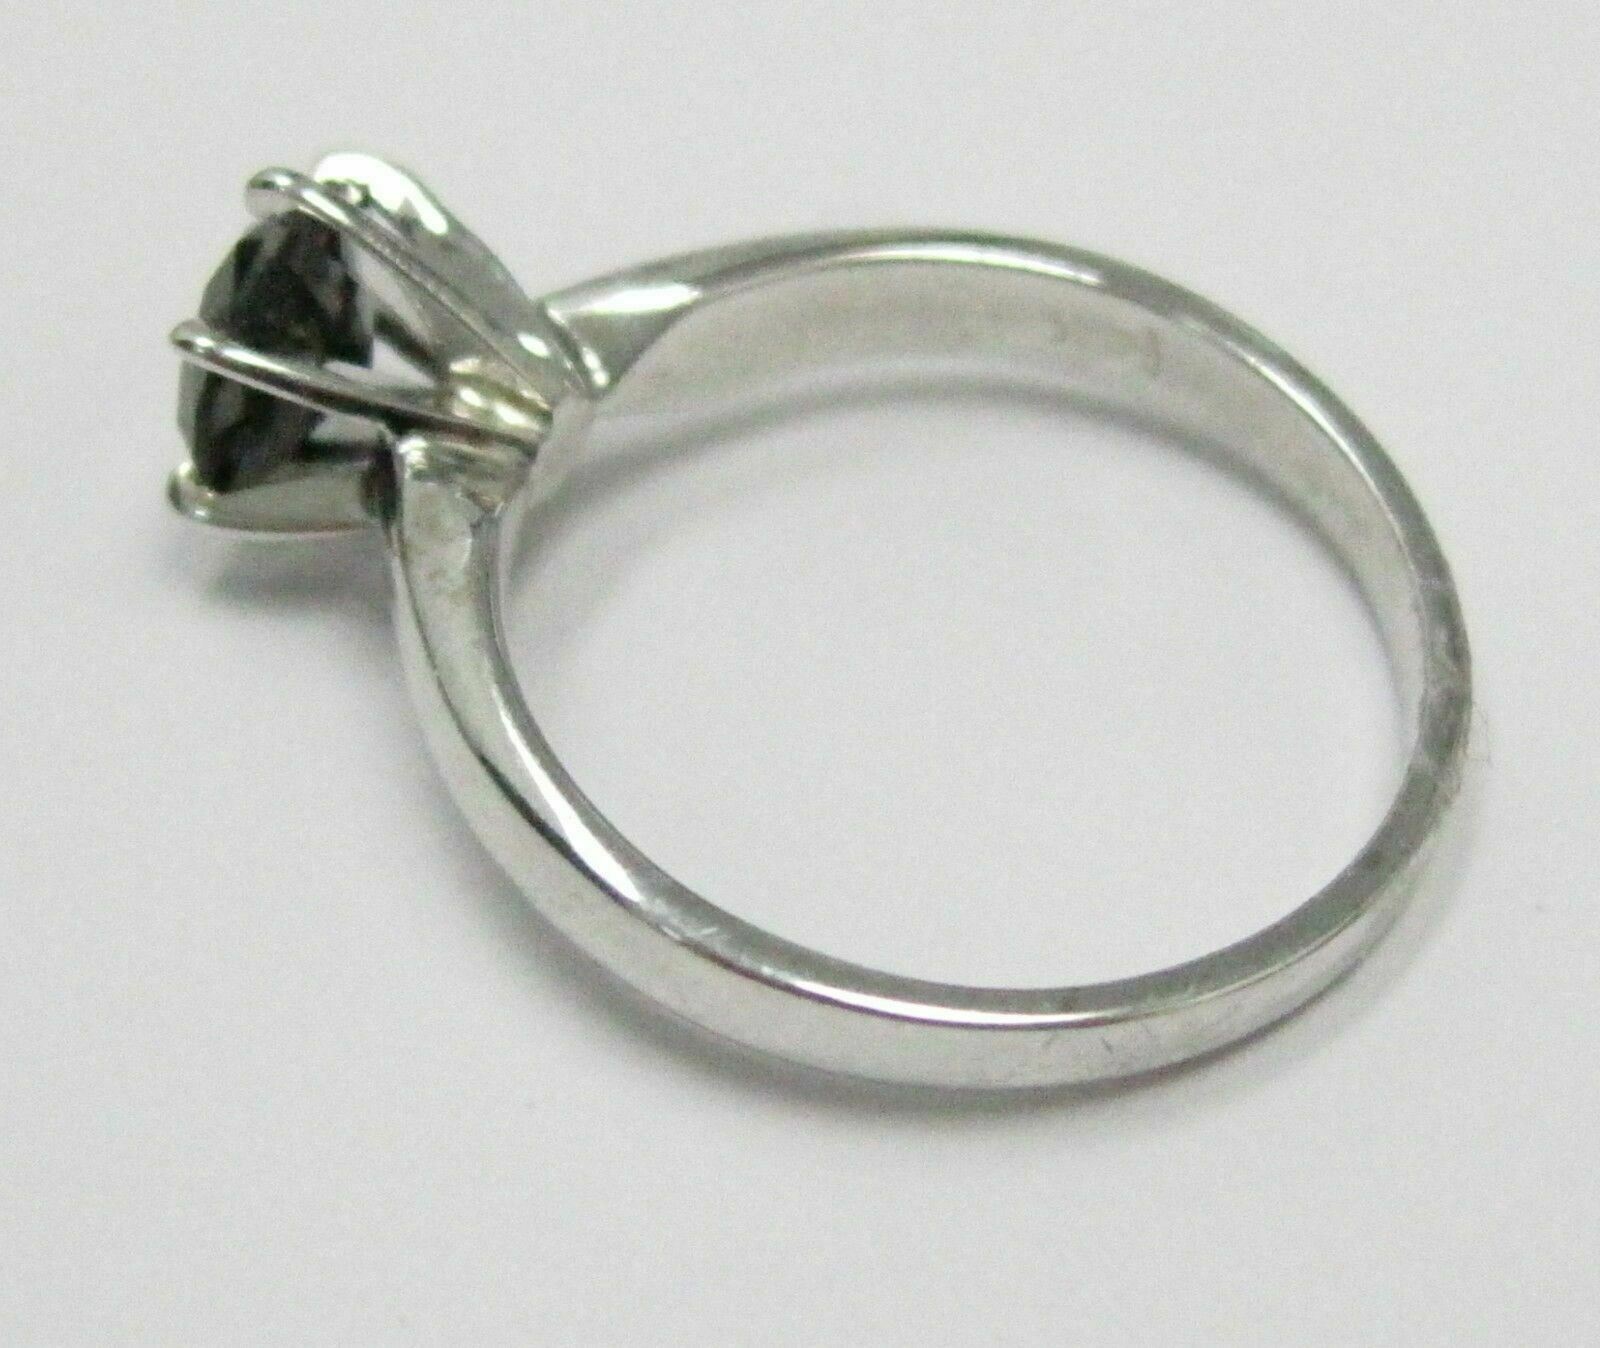 1.54 TCW Handmade Round Black Diamond Wedding Set Ring Size 5.5 14kt White Gold